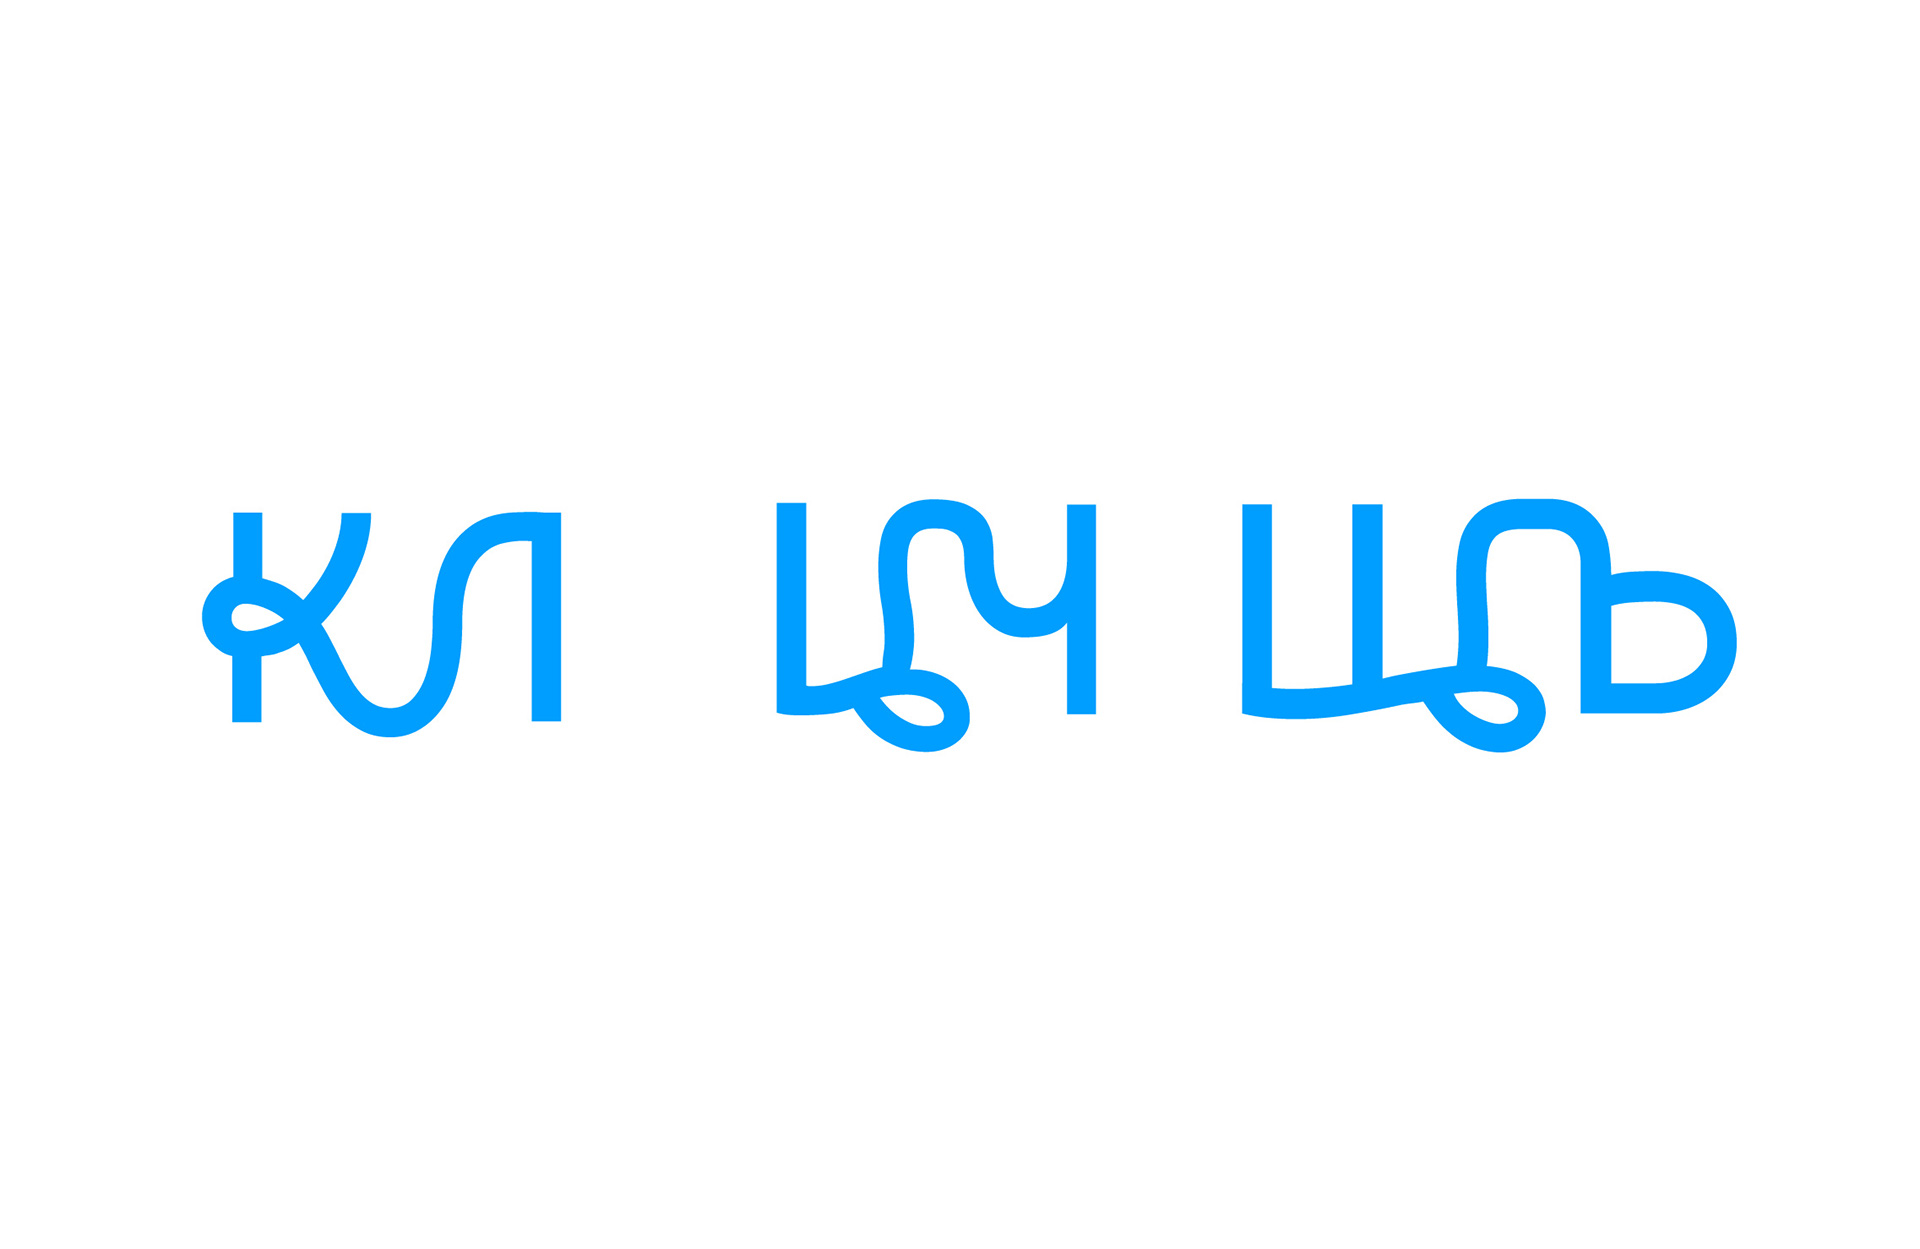 Lena Free Font - sans-serif